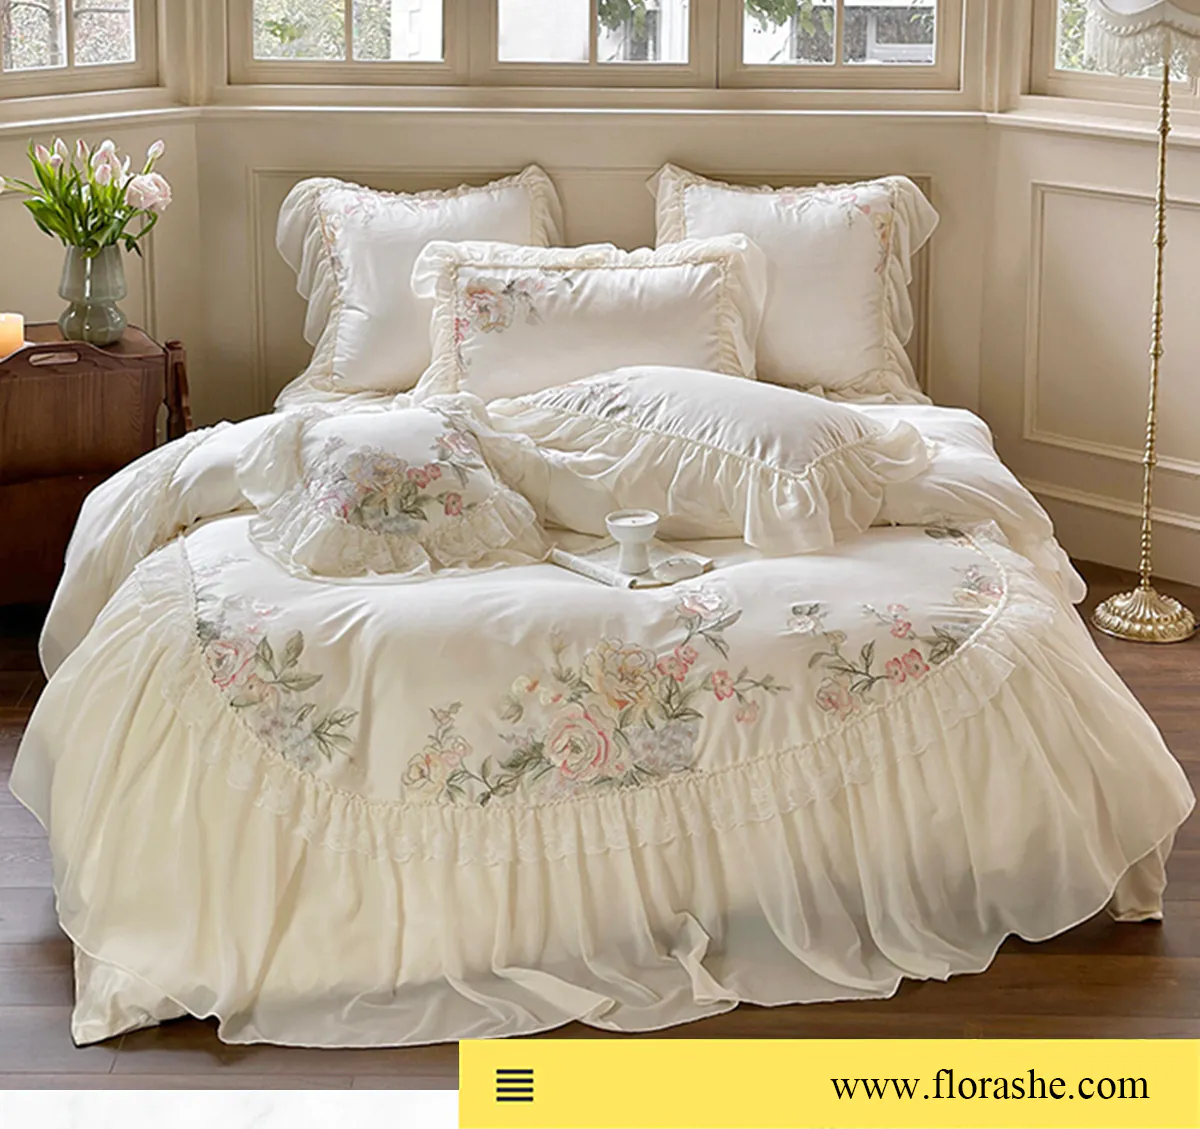 Luxury-Long-Staple-Cotton-Embroidery-Ruffle-Lace-Trim-Bedding-Set10